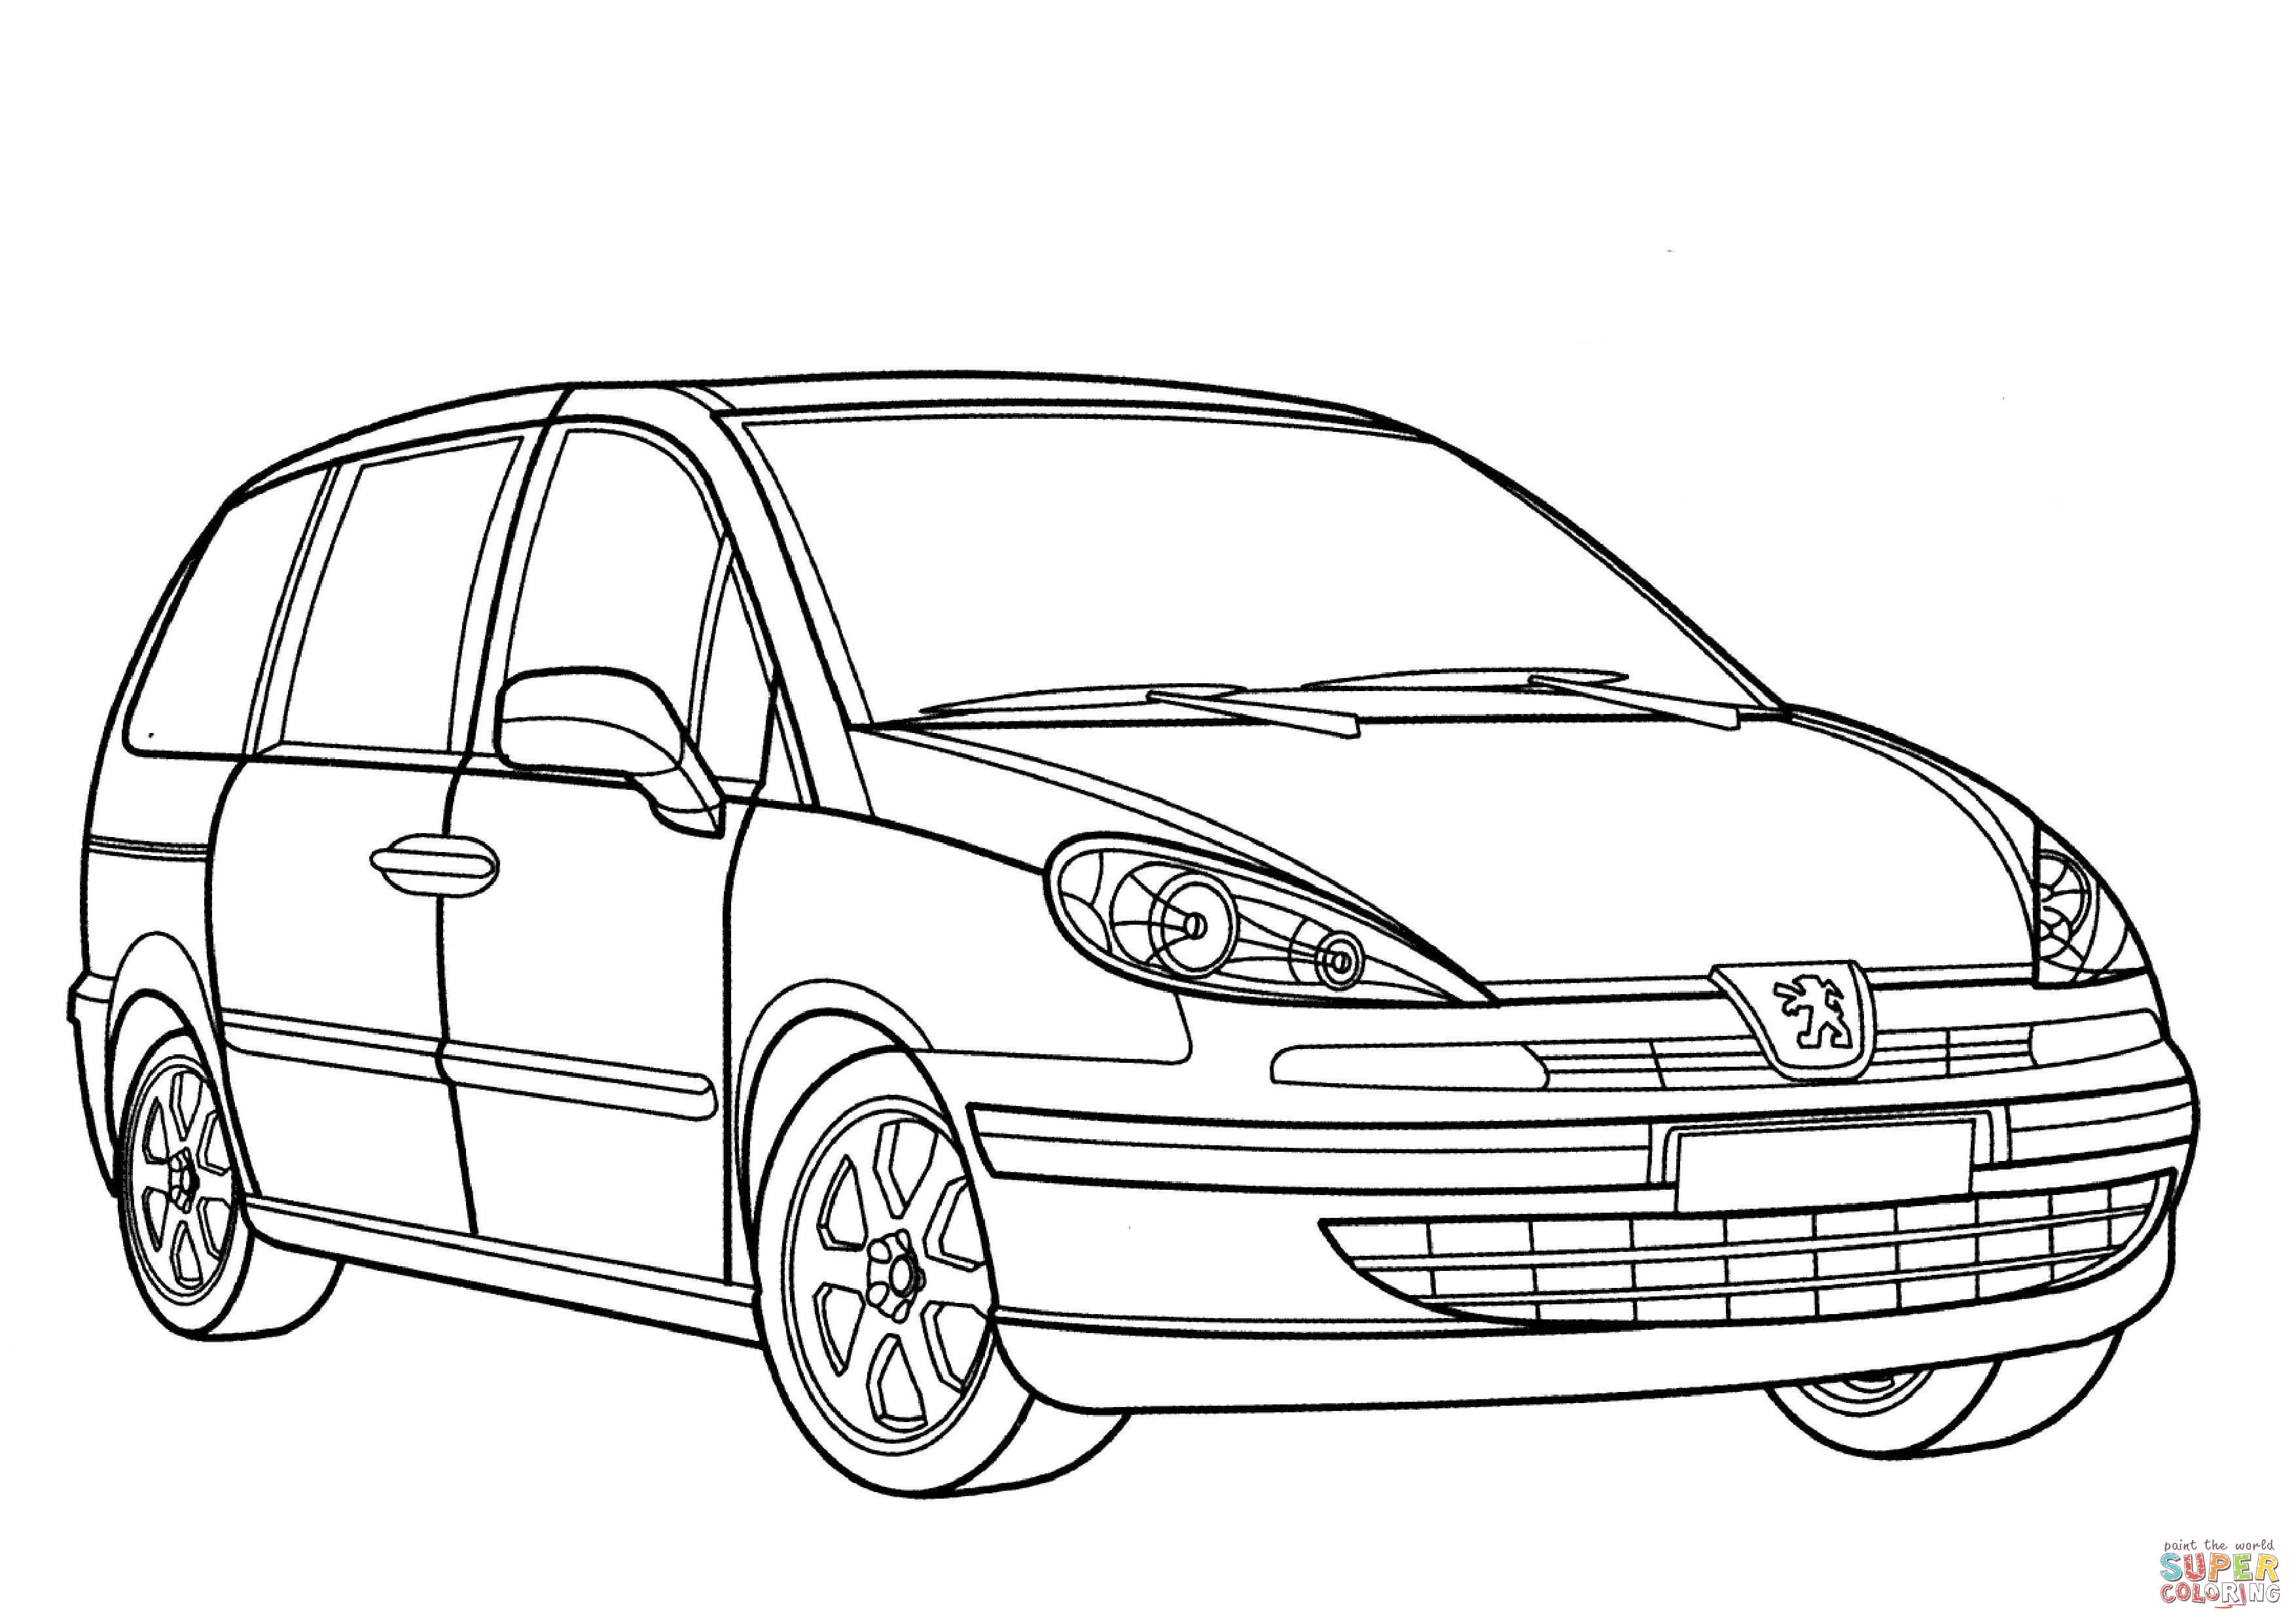 Dessin #16709 - image de Peugeot a dessiner